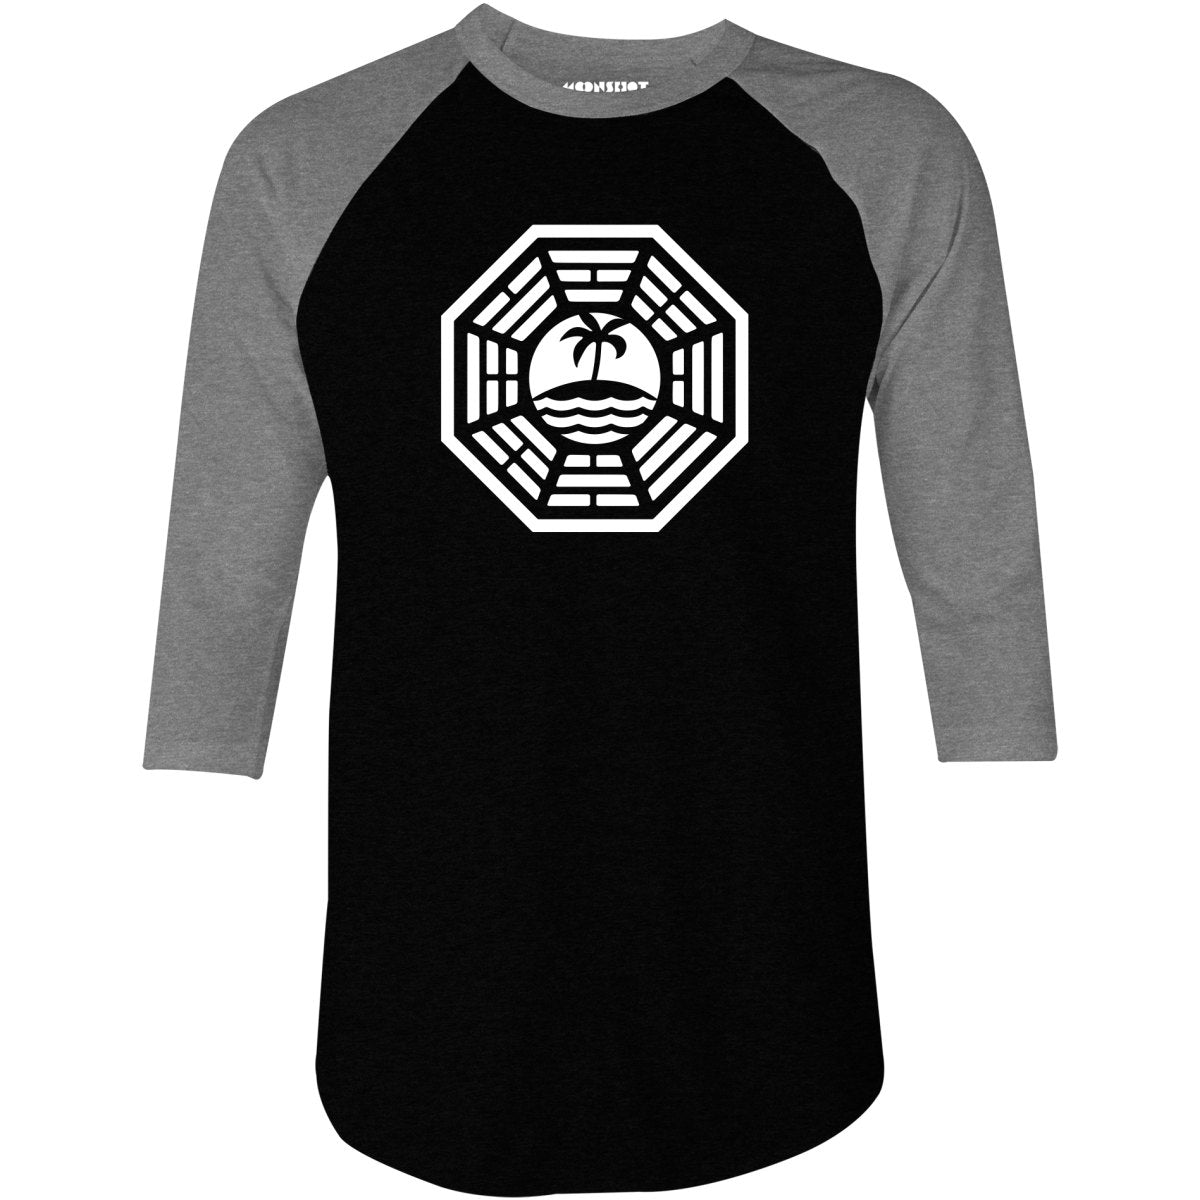 The Dharma Initiative - 3/4 Sleeve Raglan T-Shirt